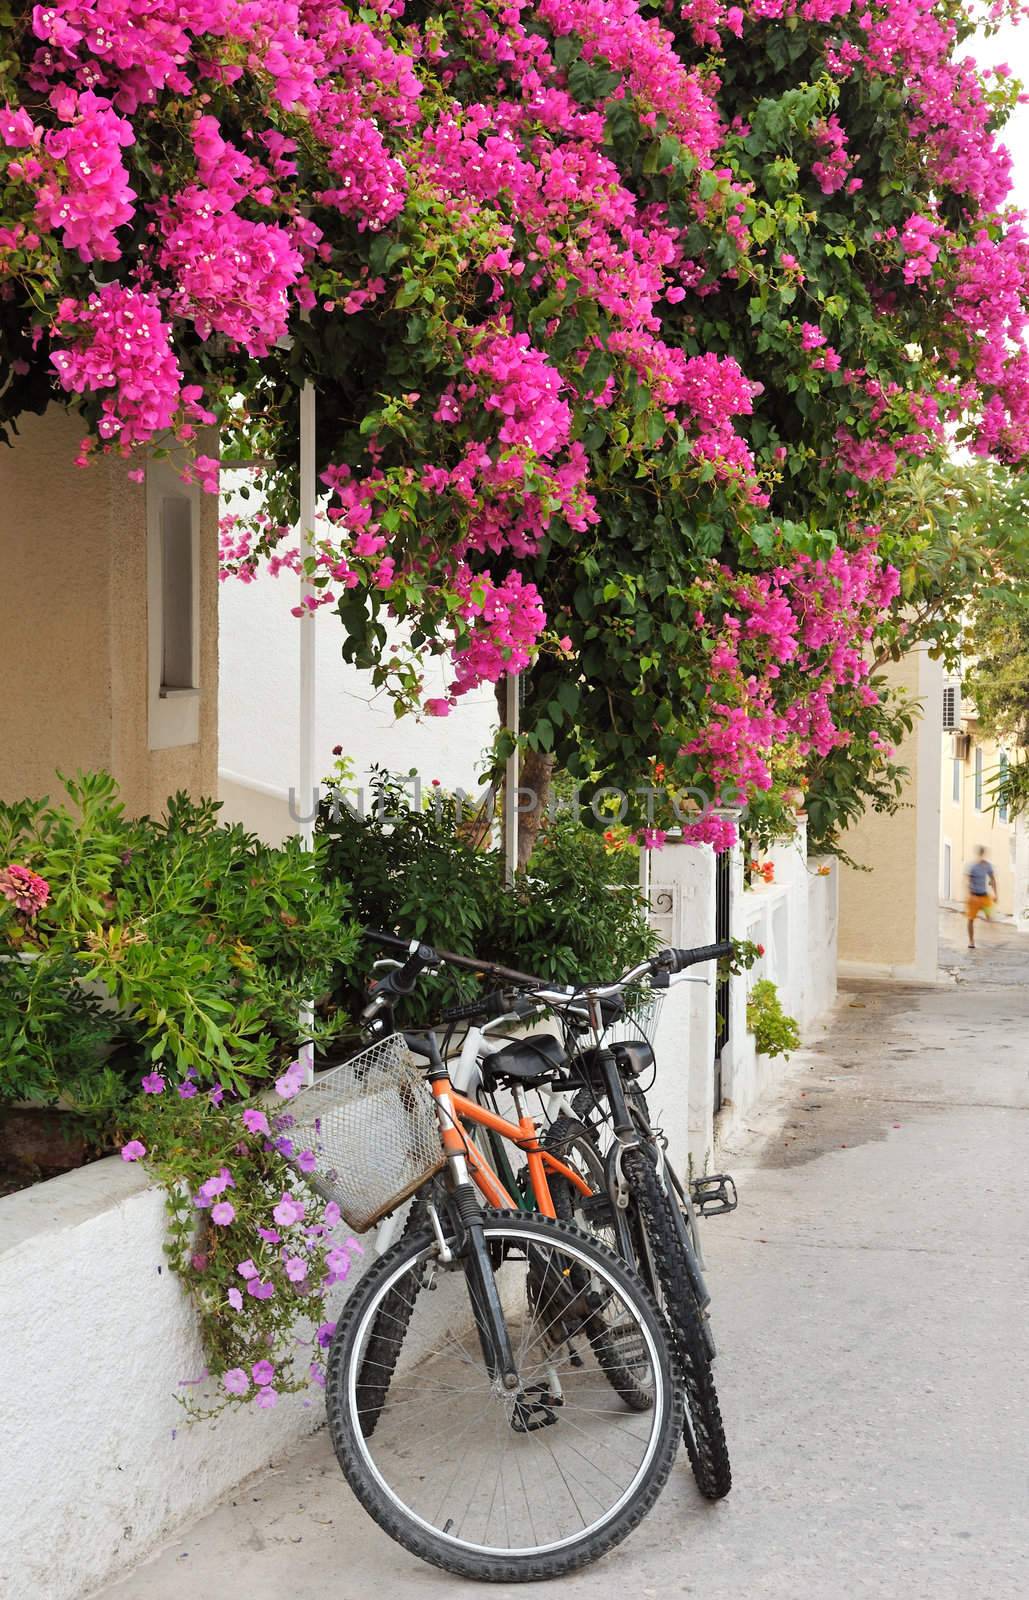 Greek island village alley by akarelias